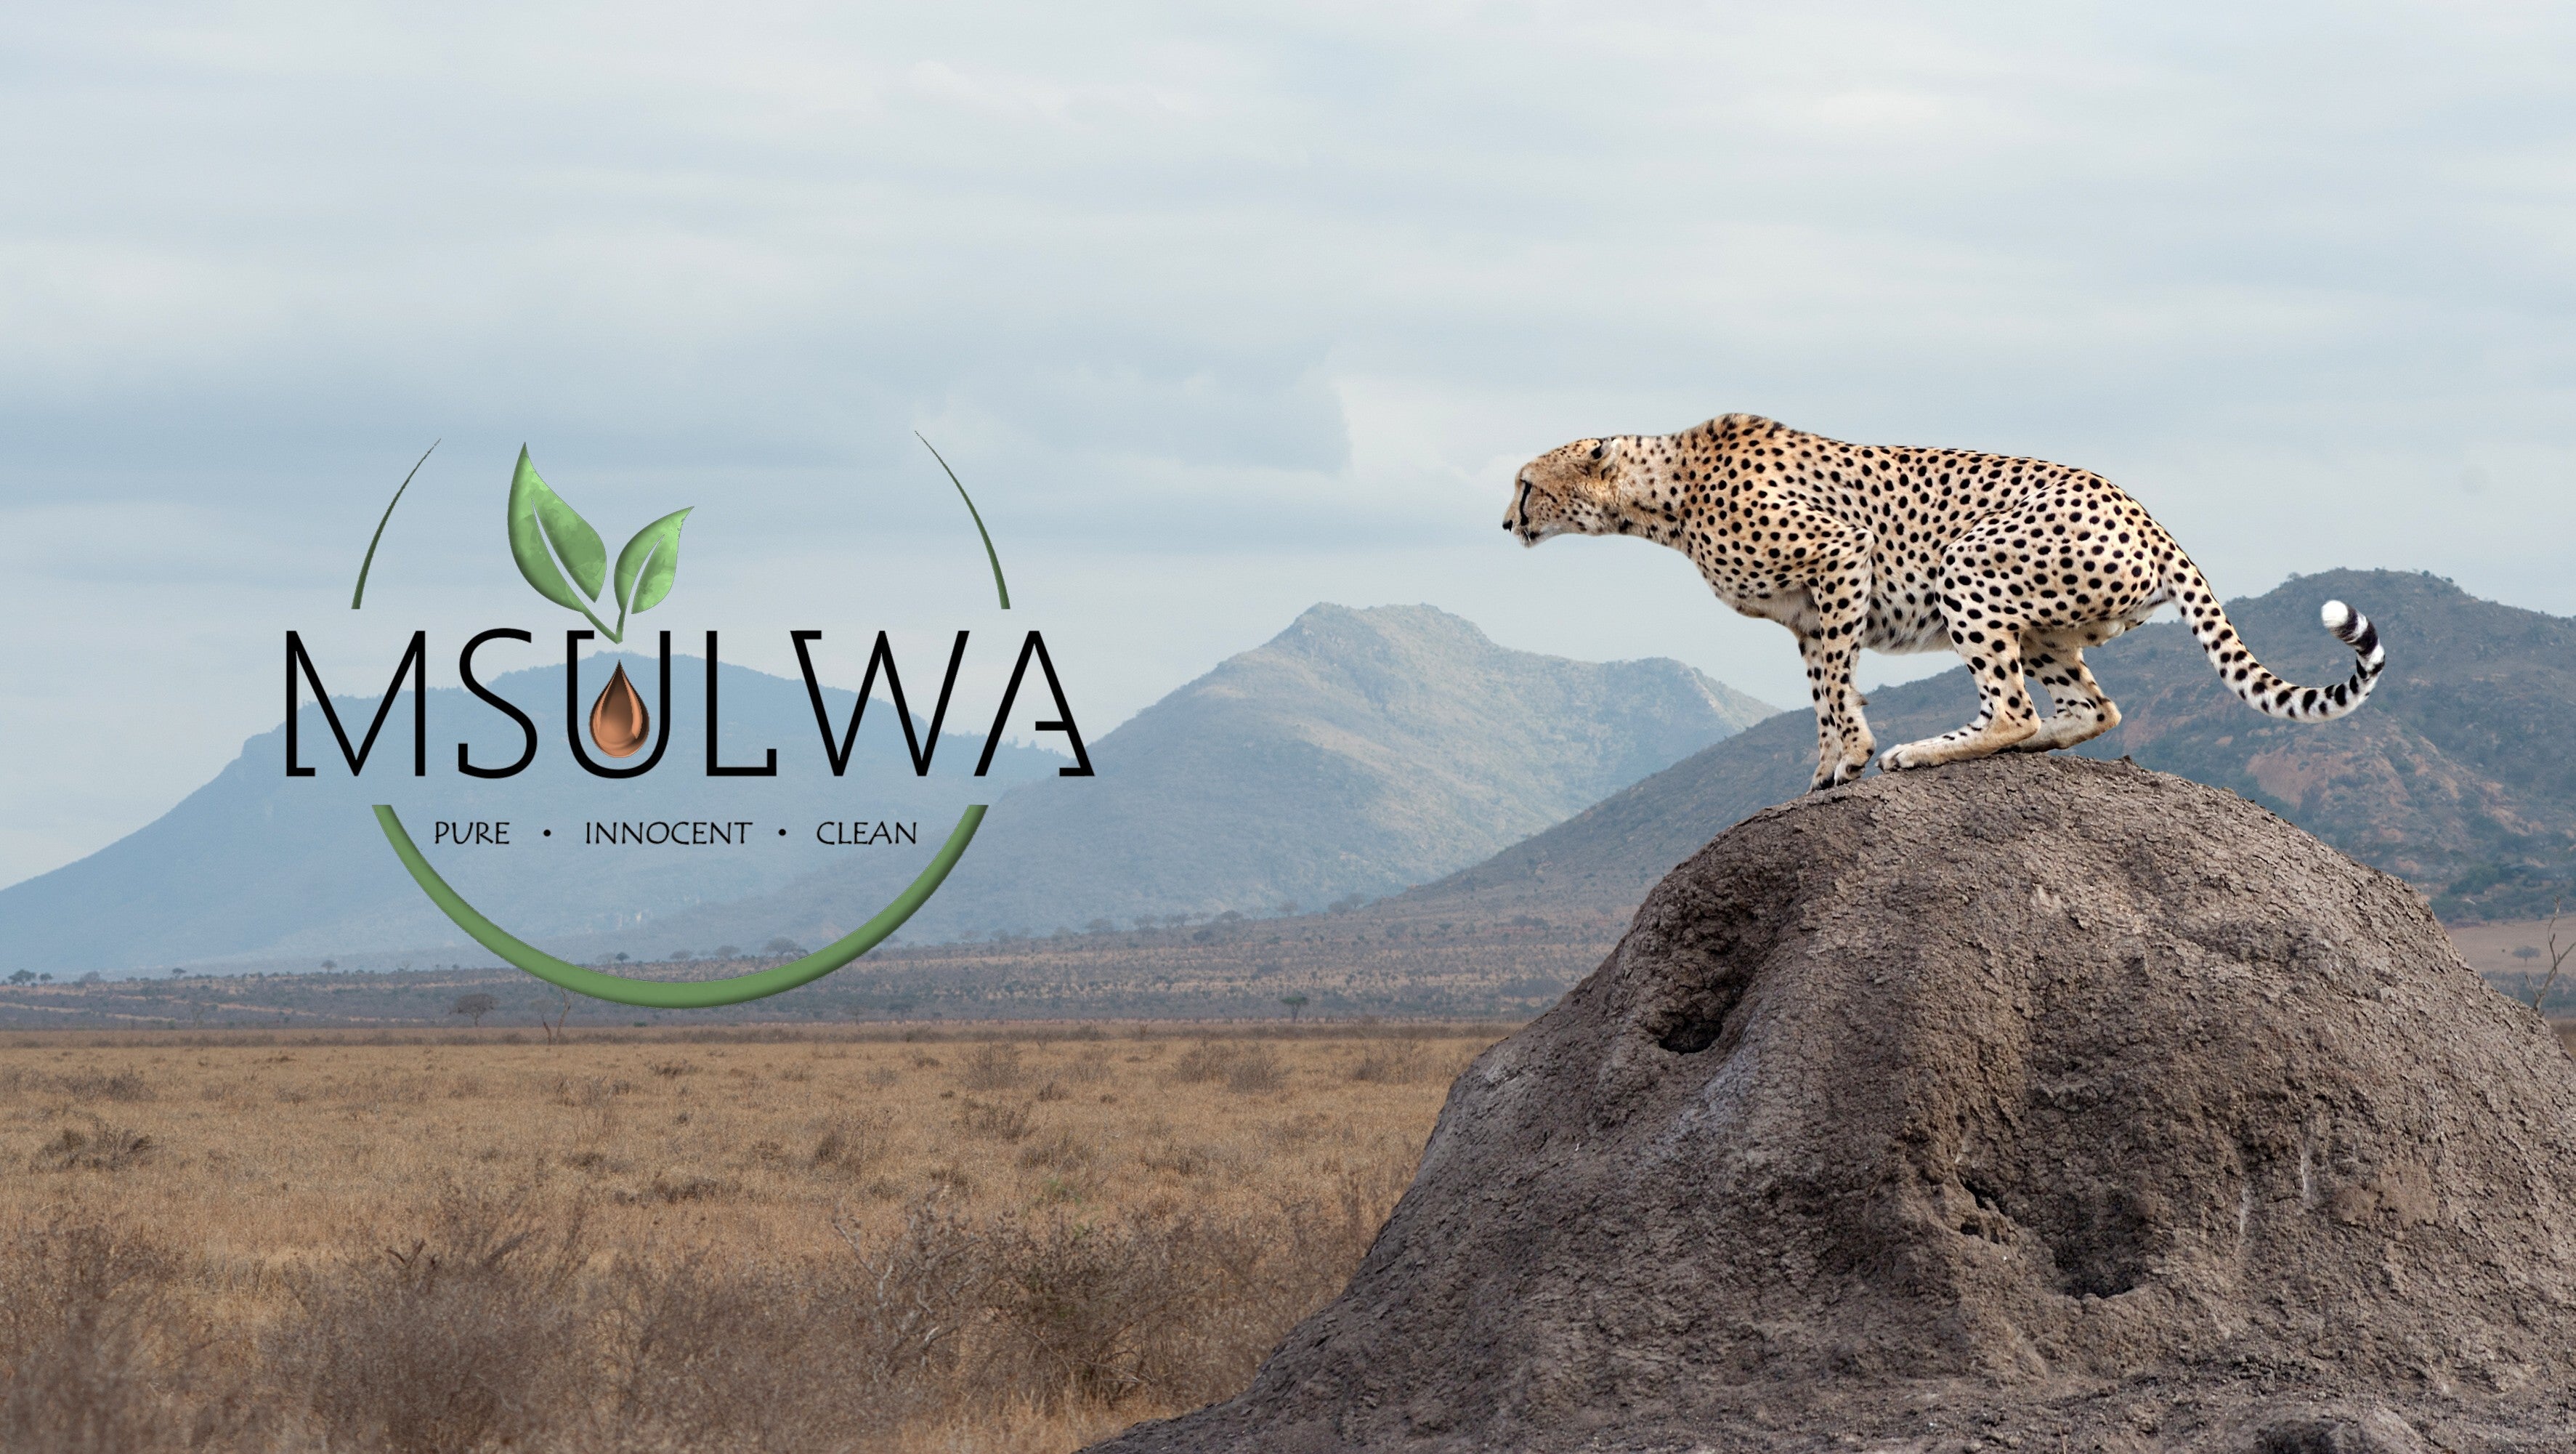 Msulwa eco-friendly products shop online at www.msulwa.co.za and www.msulwa.com